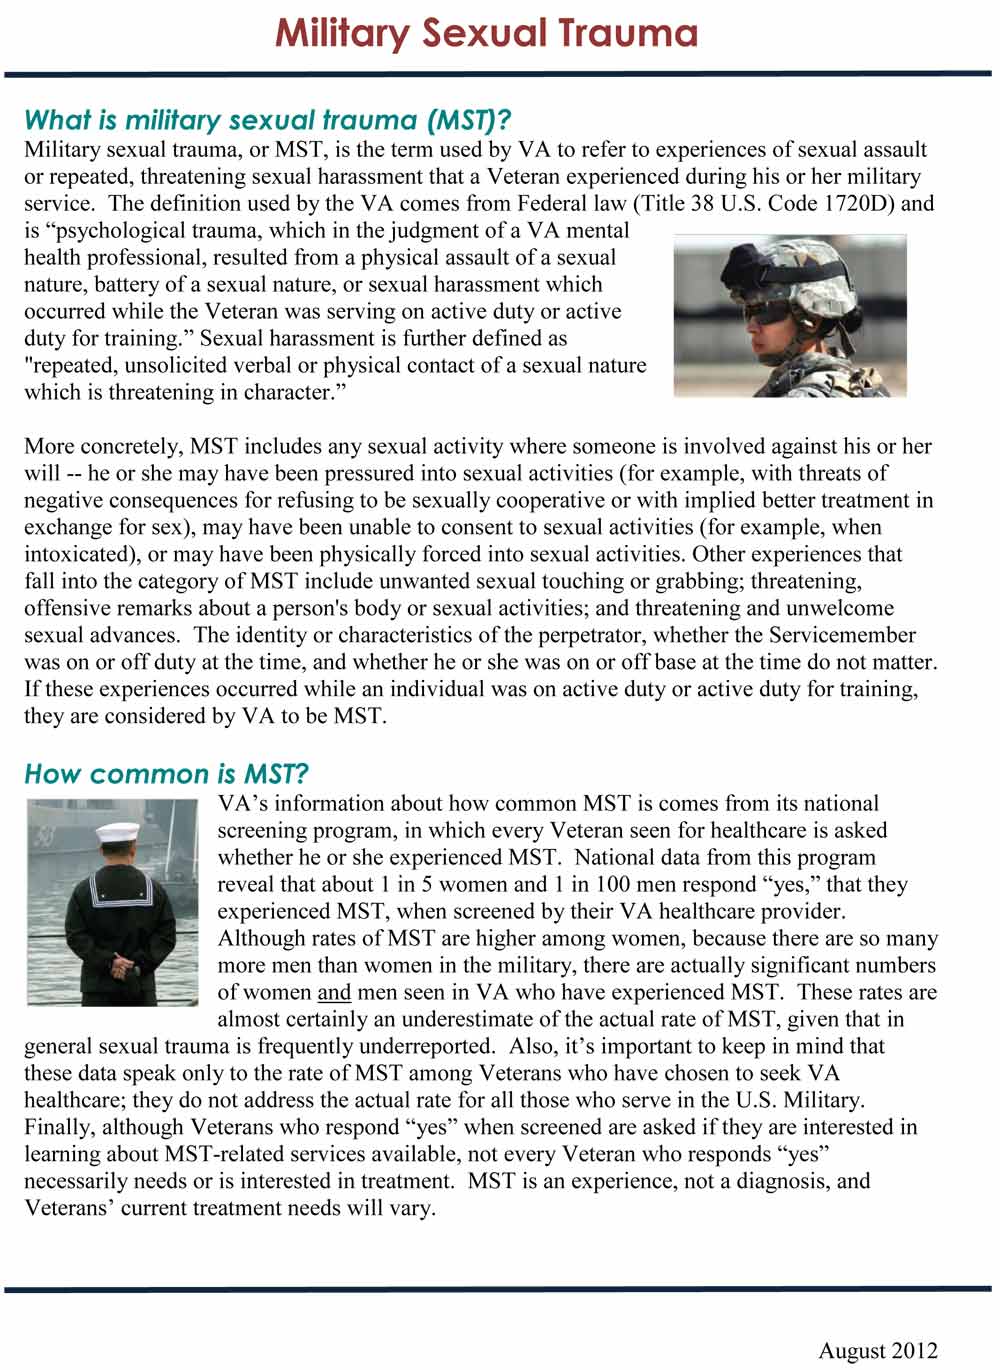 mst-general-fact-sheet-august-2012-1